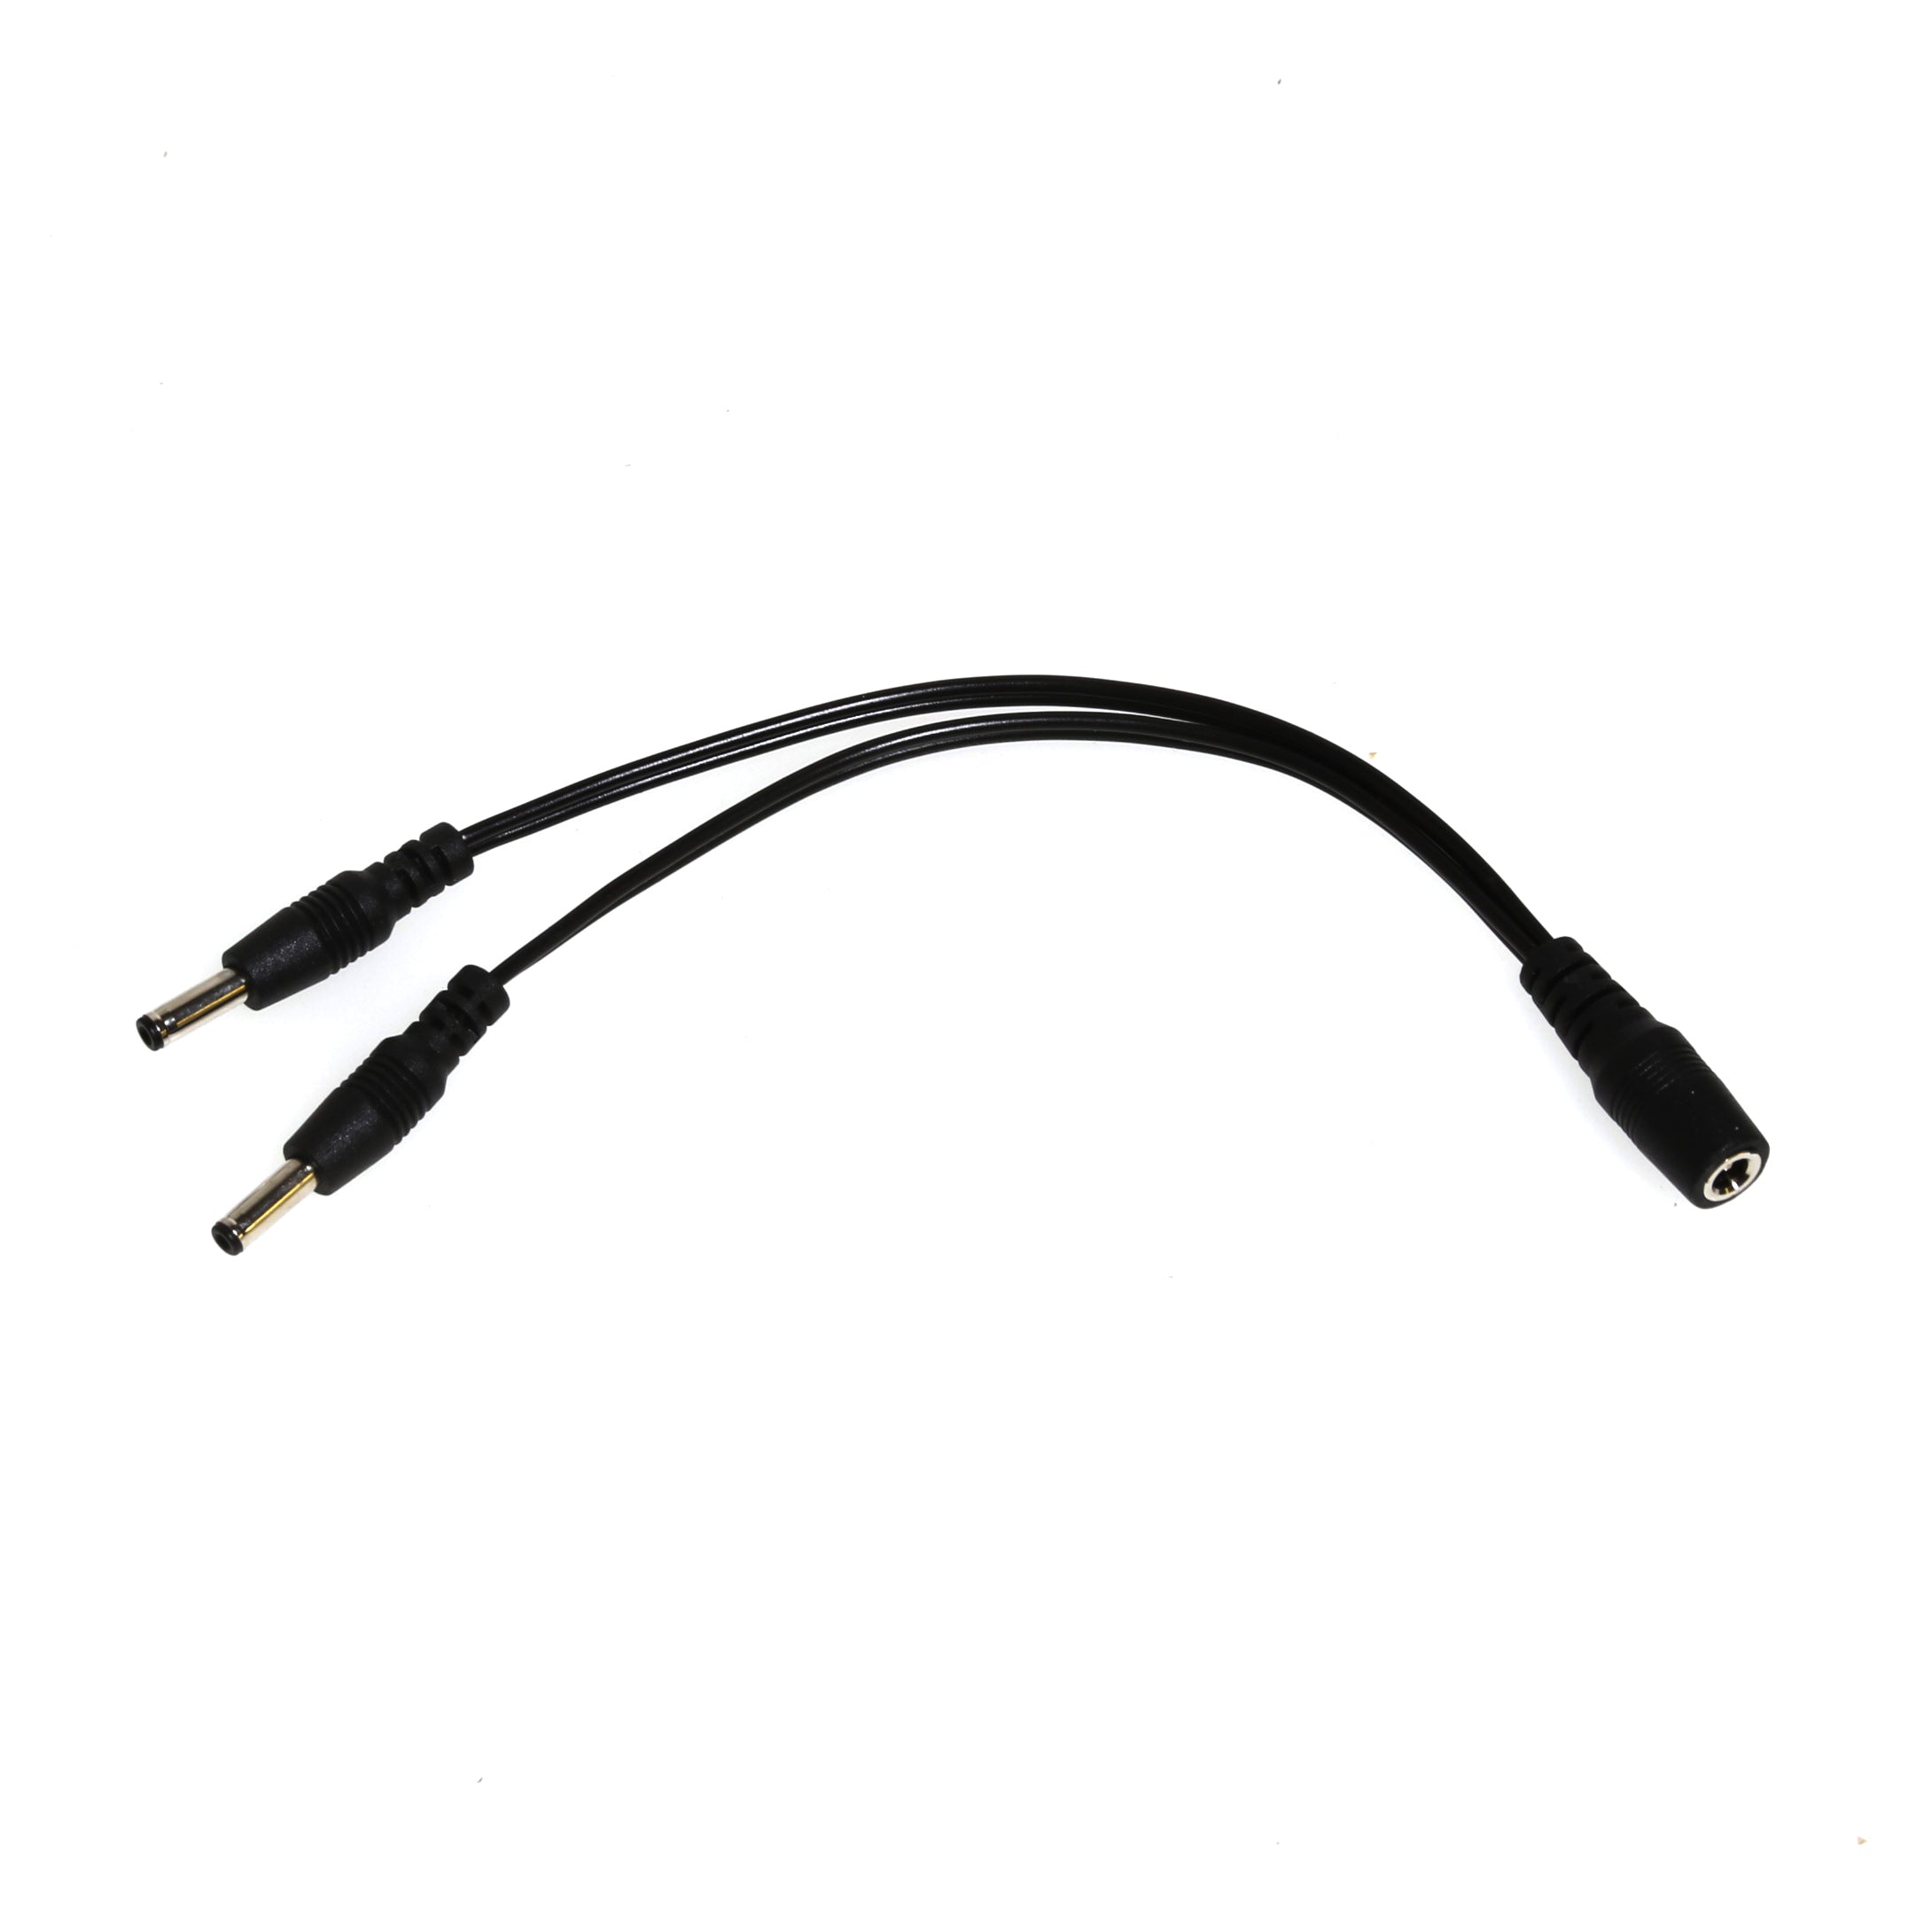 6 inch Interconnect Splitter Cable for Modular LED Under Cabinet Lighting (Black)